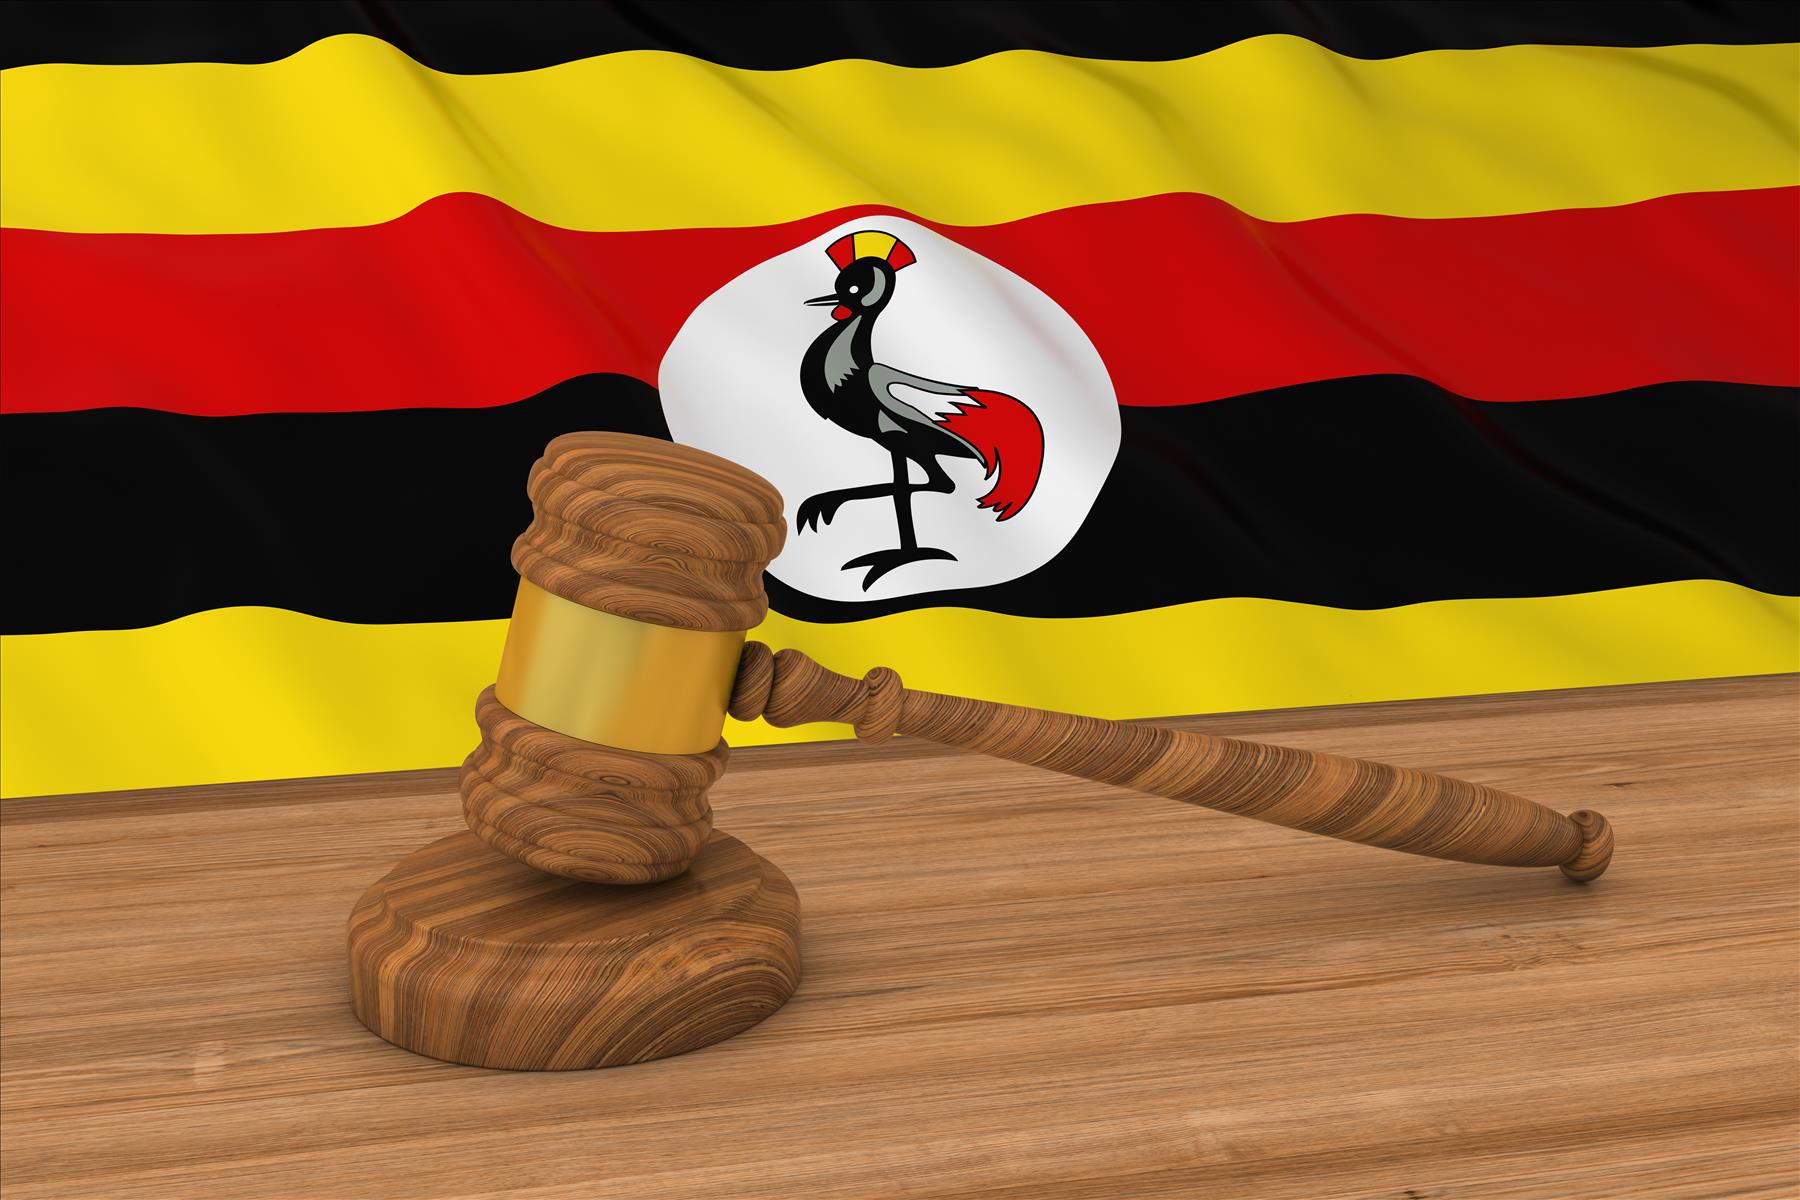 Museveni needs protection of foolish laws?